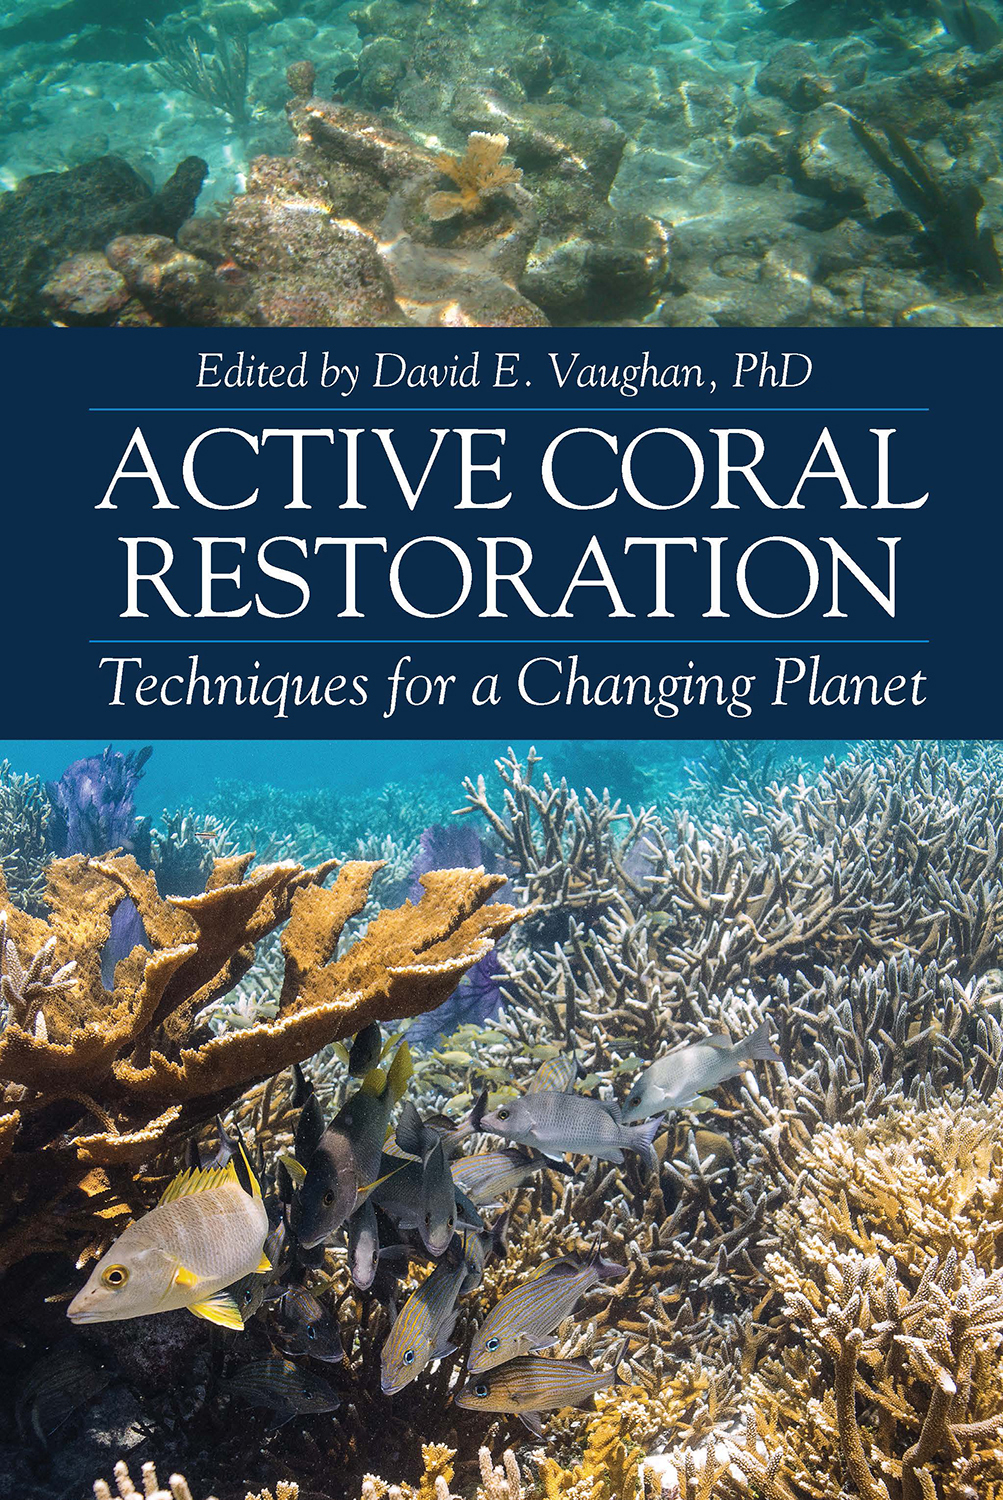 Active Coral Restoration